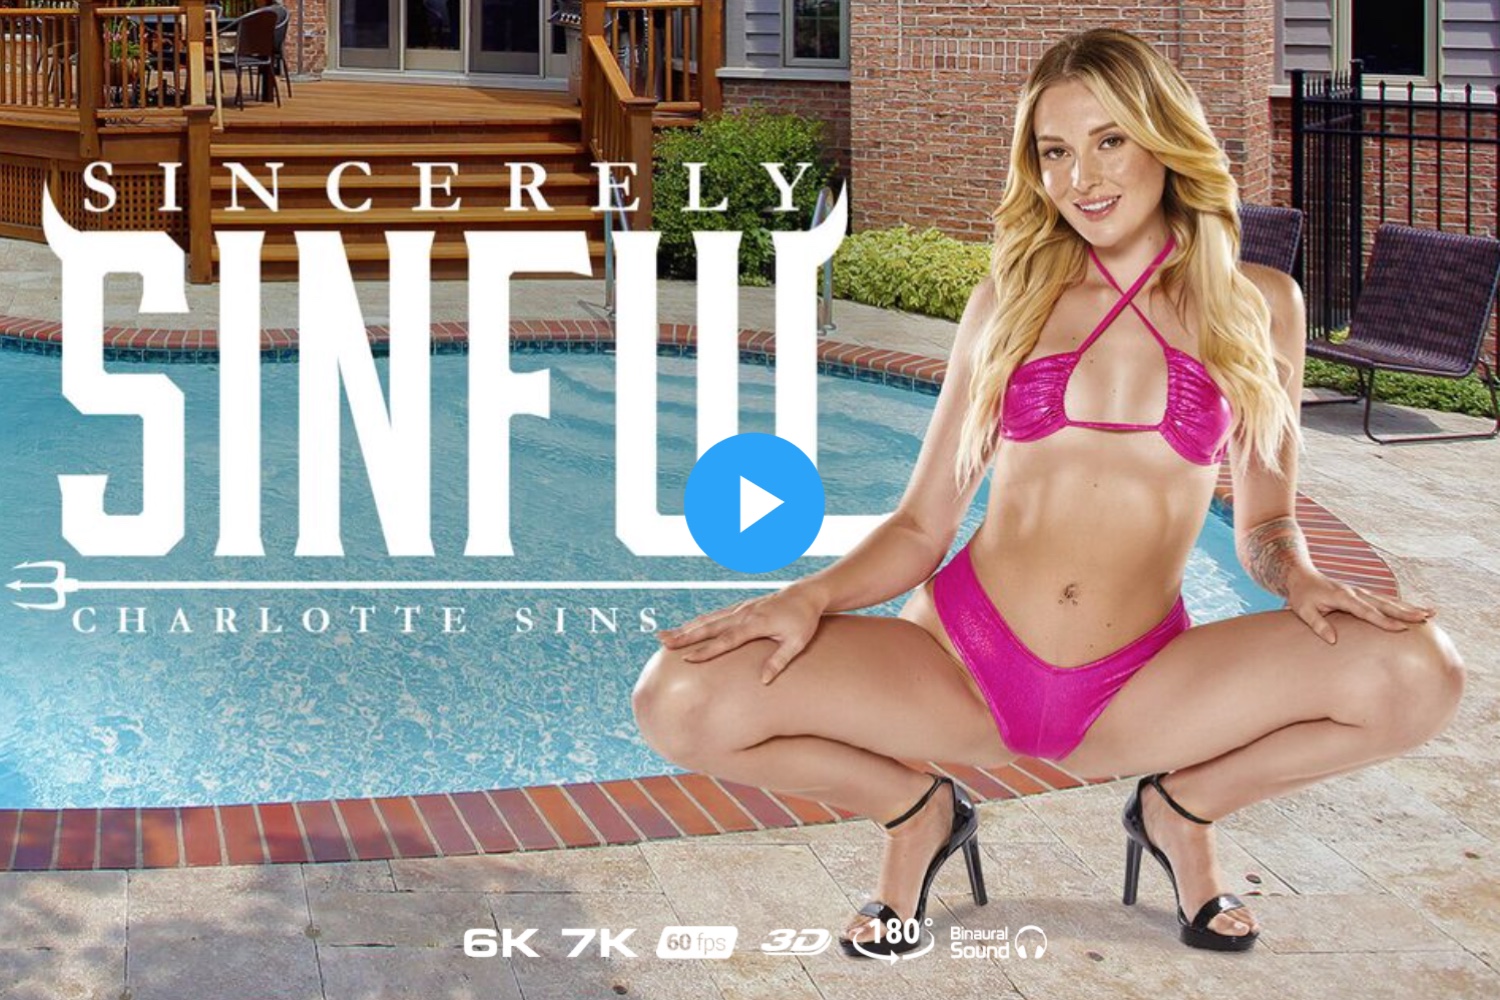 Sincerely Sinful - Charlotte Sins VR Porn - Charlotte Sins Virtual Reality Porn